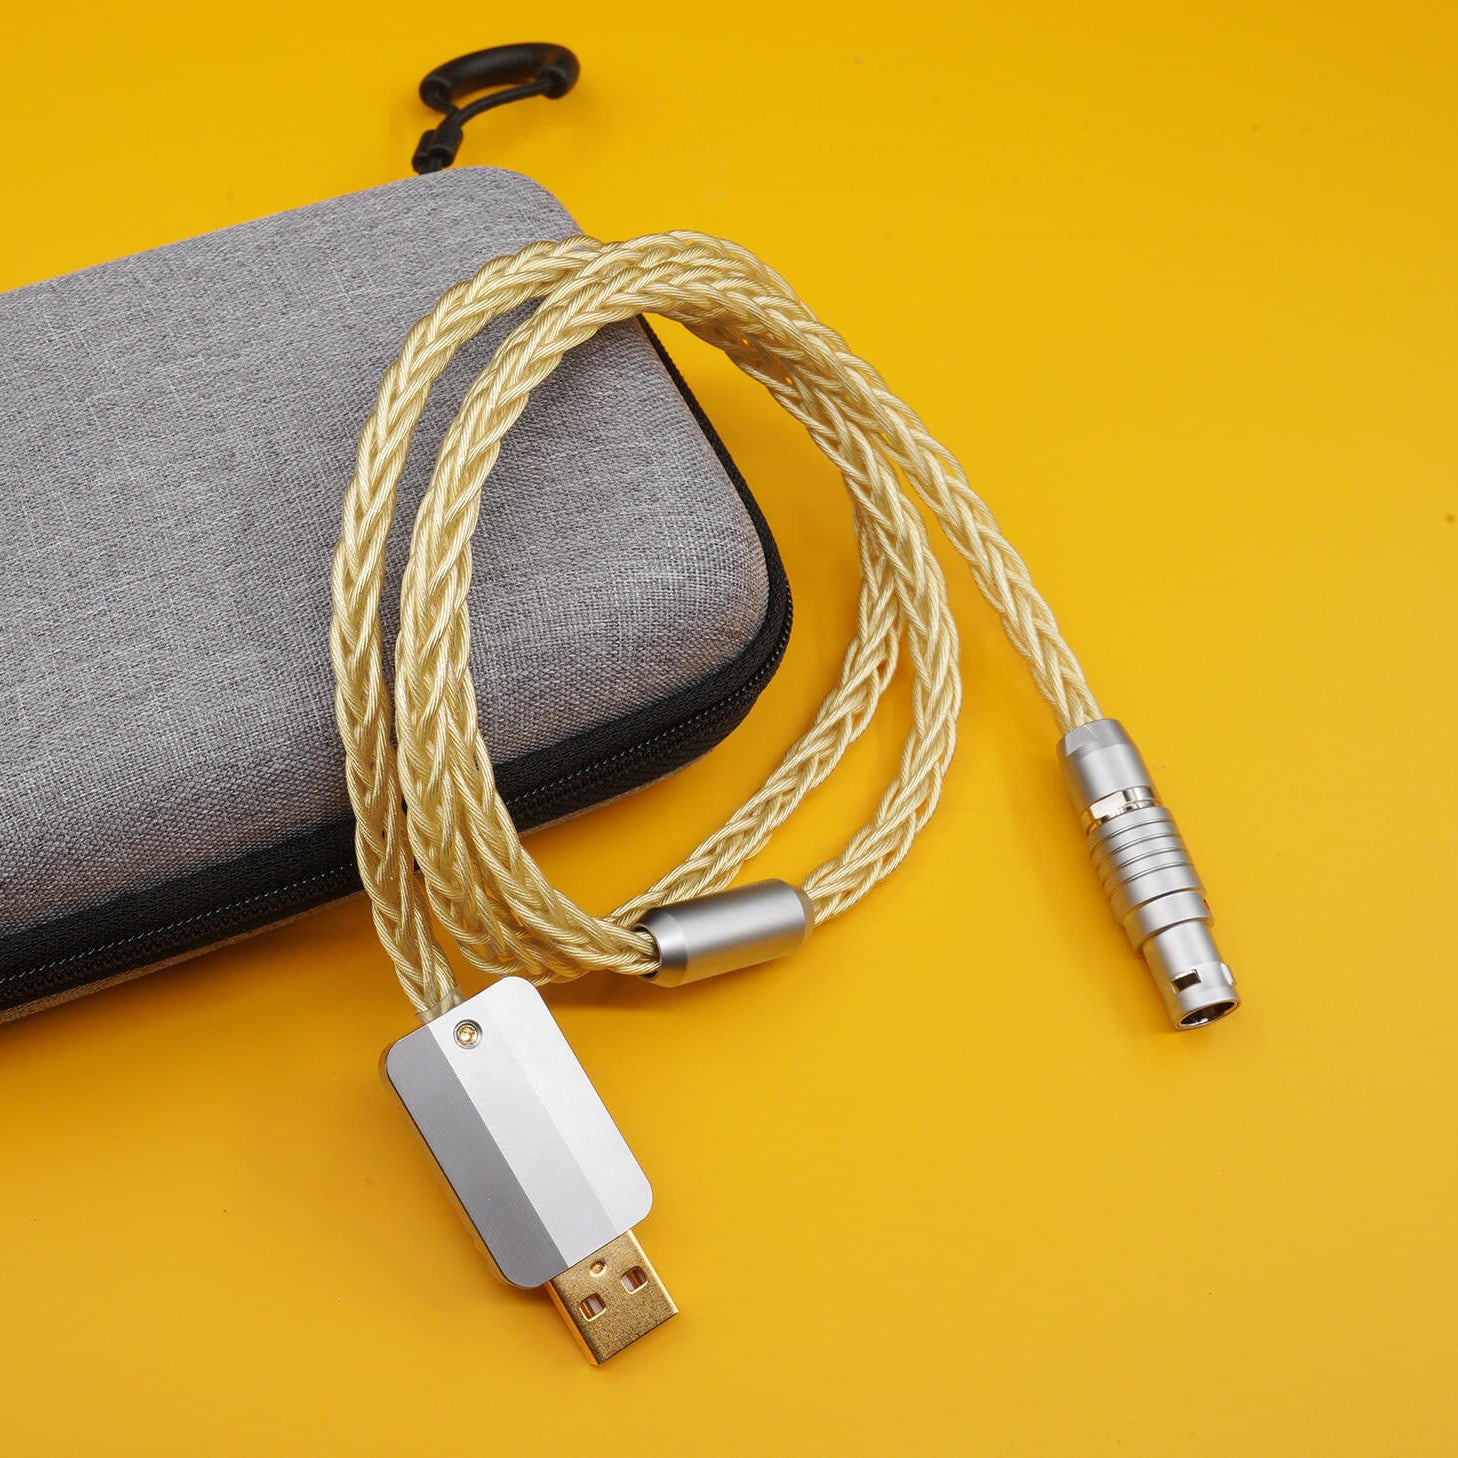 Cable USB de alambre de cobre monocristalino revestido de plata hecho a mano MelGeek